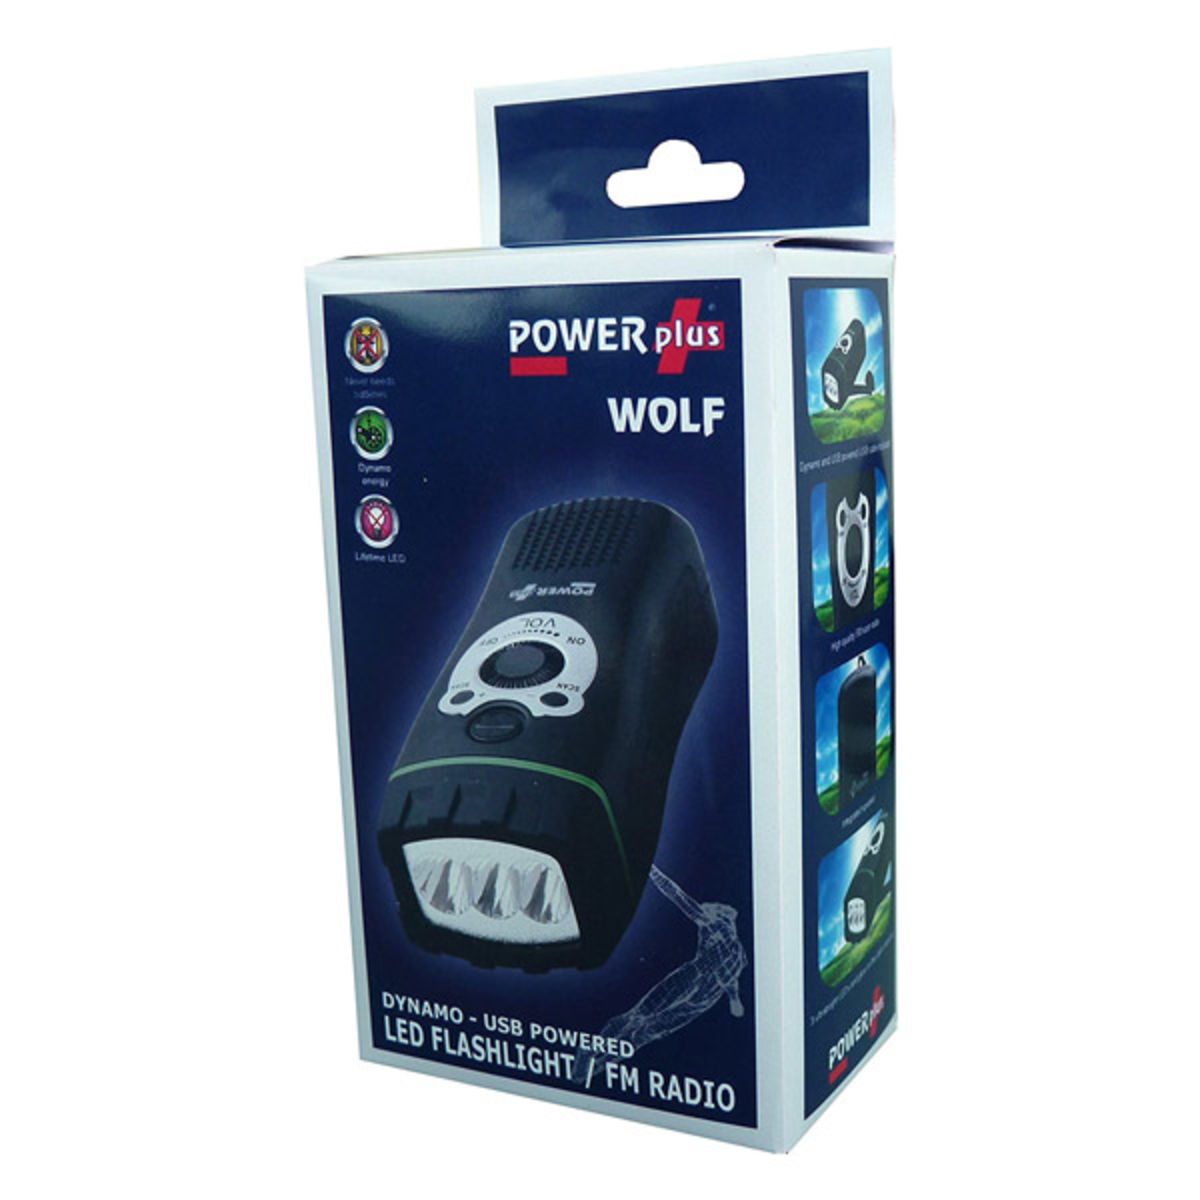 Powerplus Wolf torch radio - USB/Dynamo